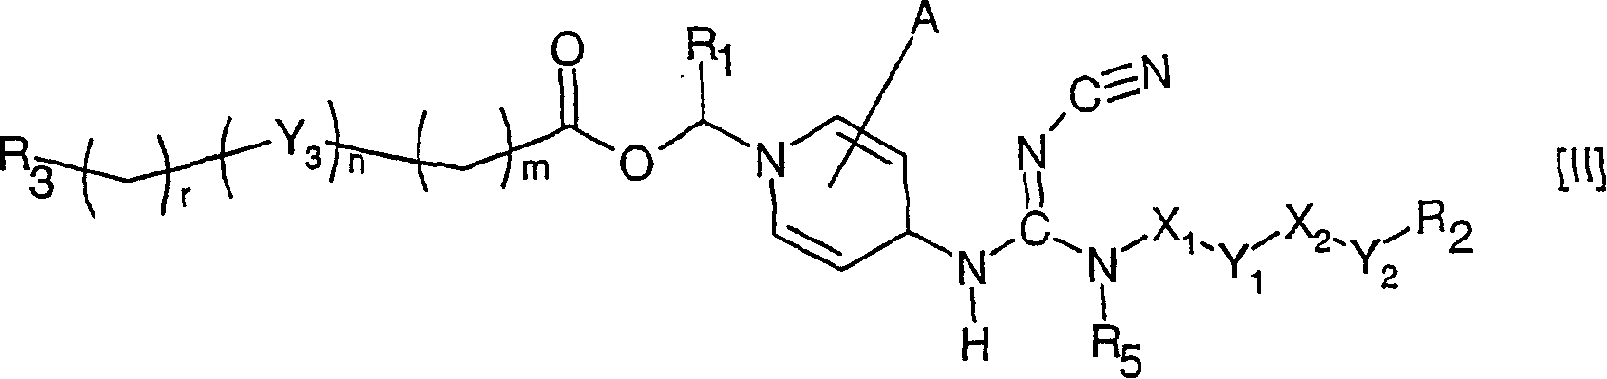 Cyanoguanidine prodrugs